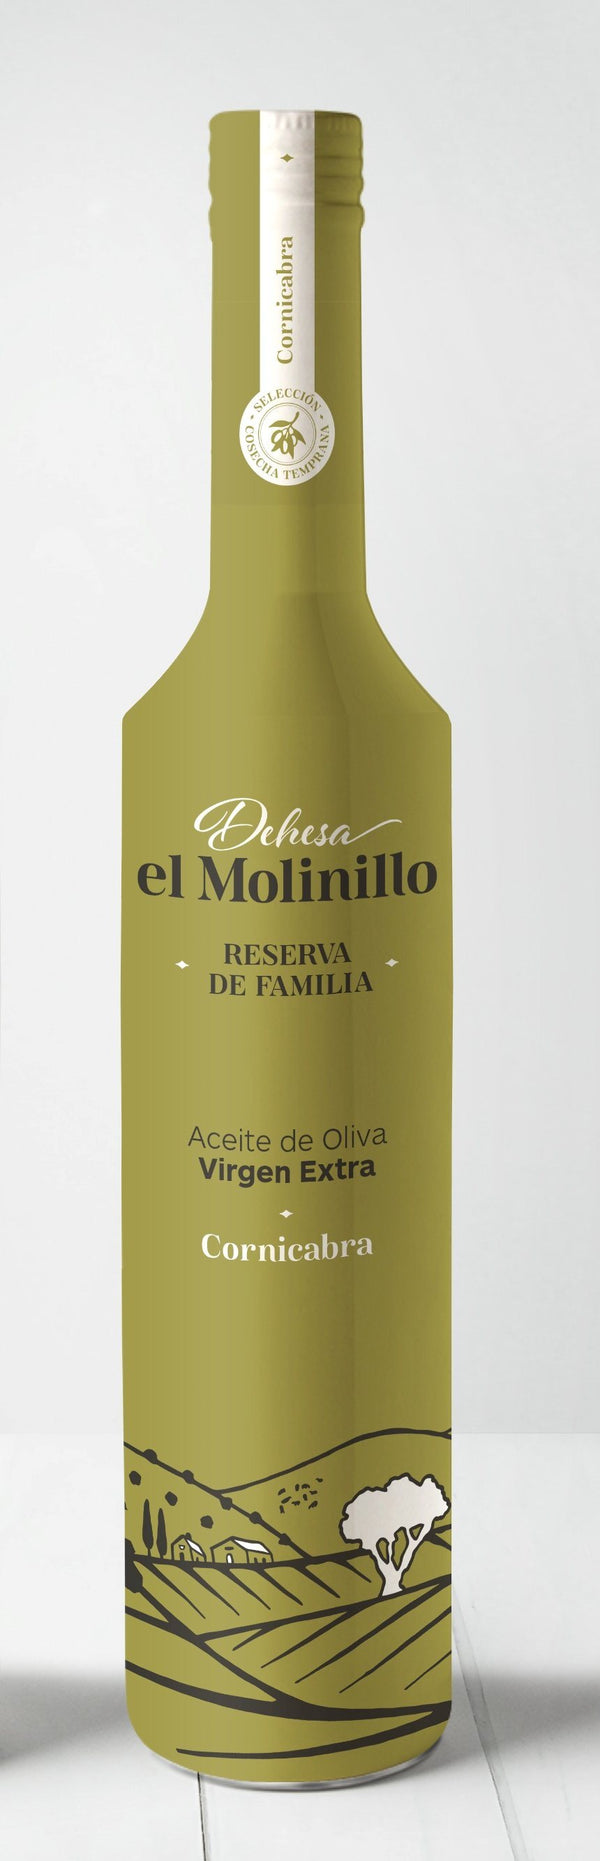 Aceite de Oliva Virgen Extra Dehesa El Molinillo Reserva de Familia Cornicabra 500ml.